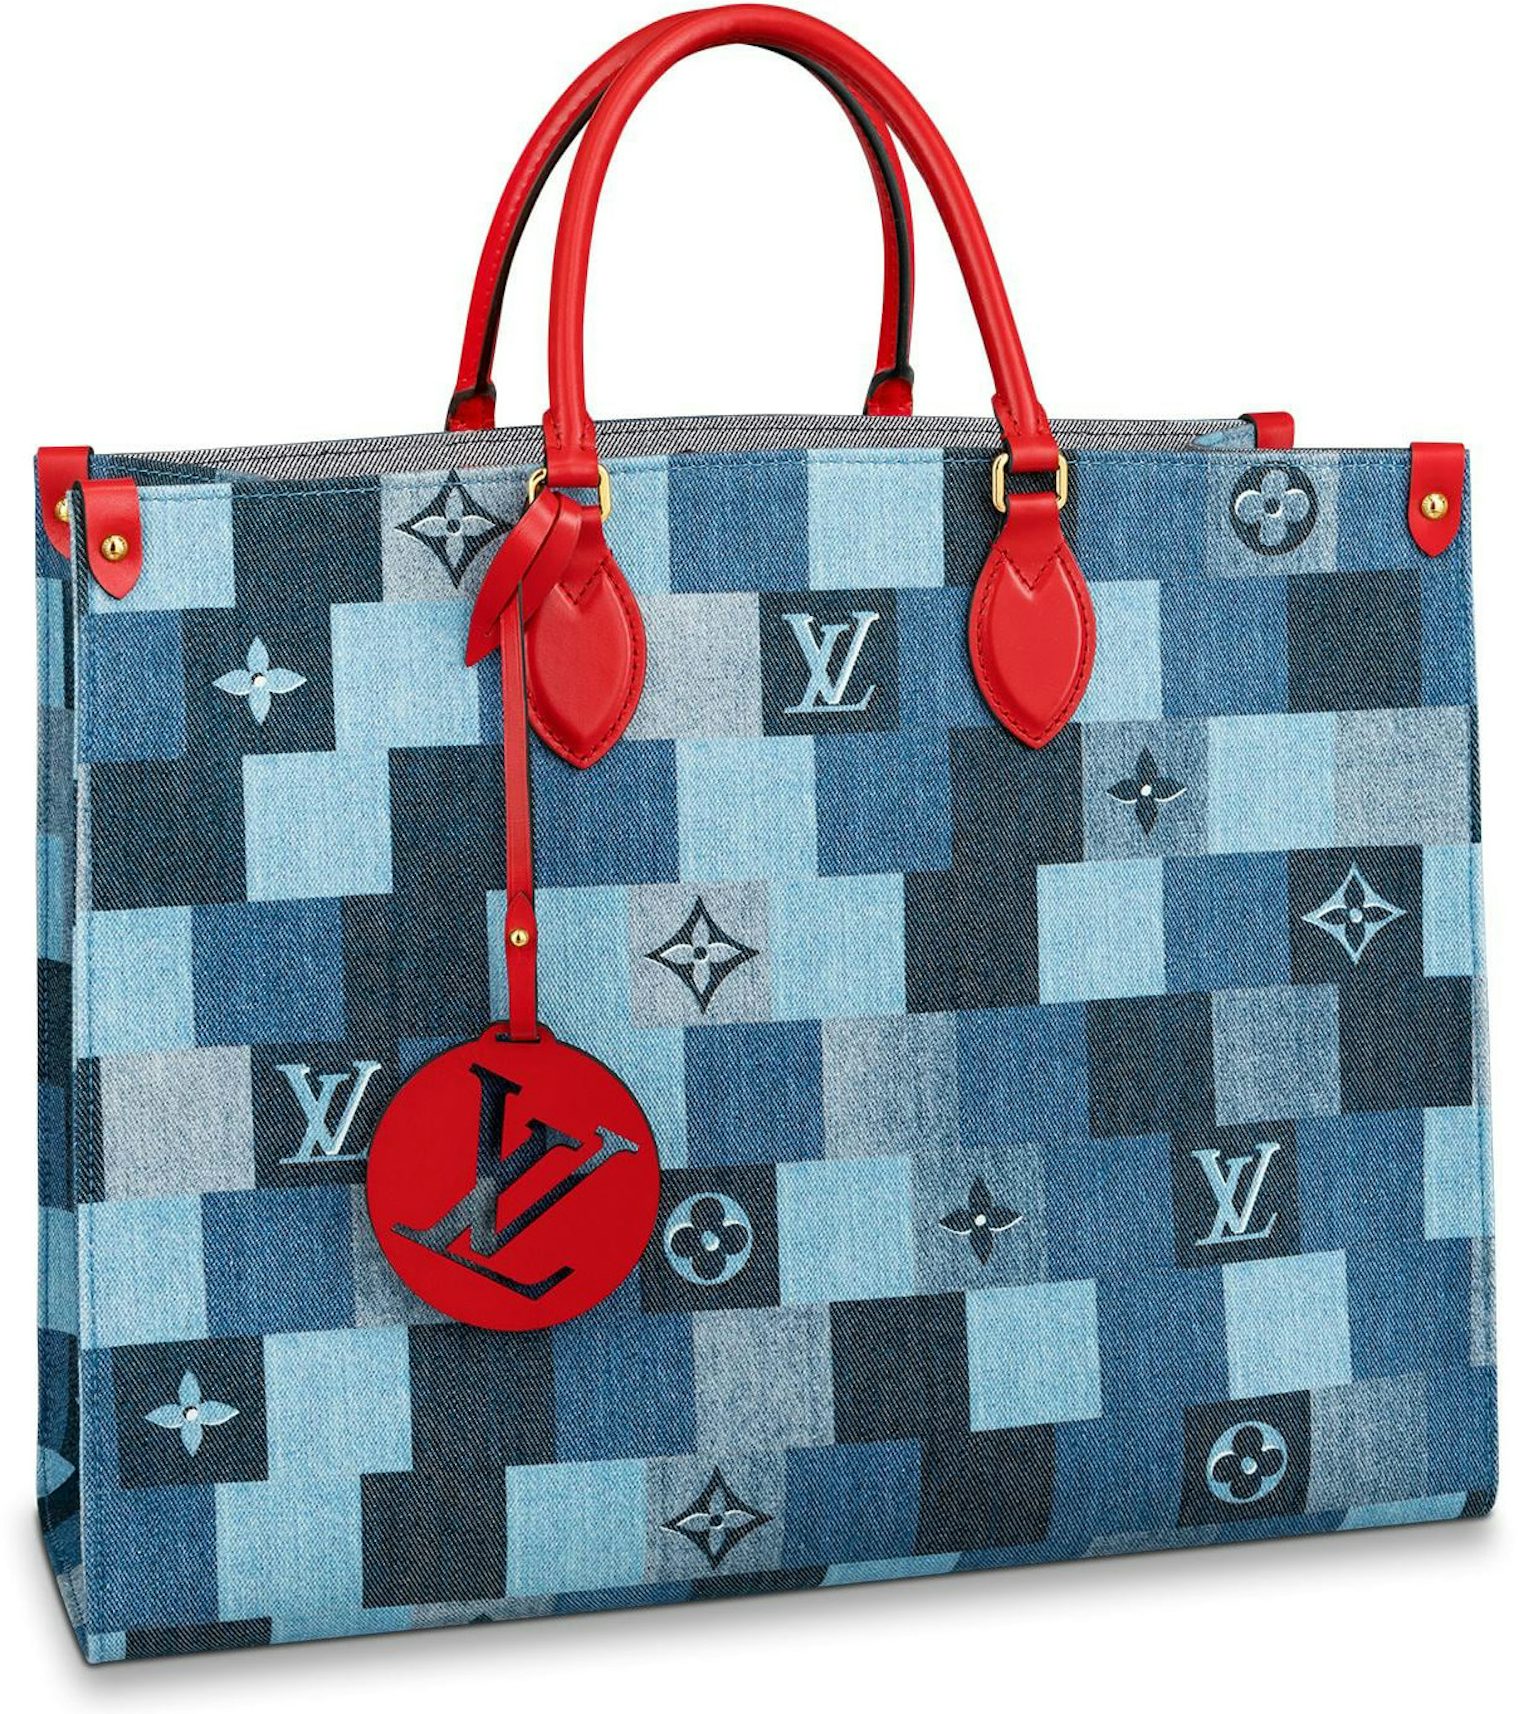 Louis Vuitton Damier Monogram Patchwork Denim Handbag